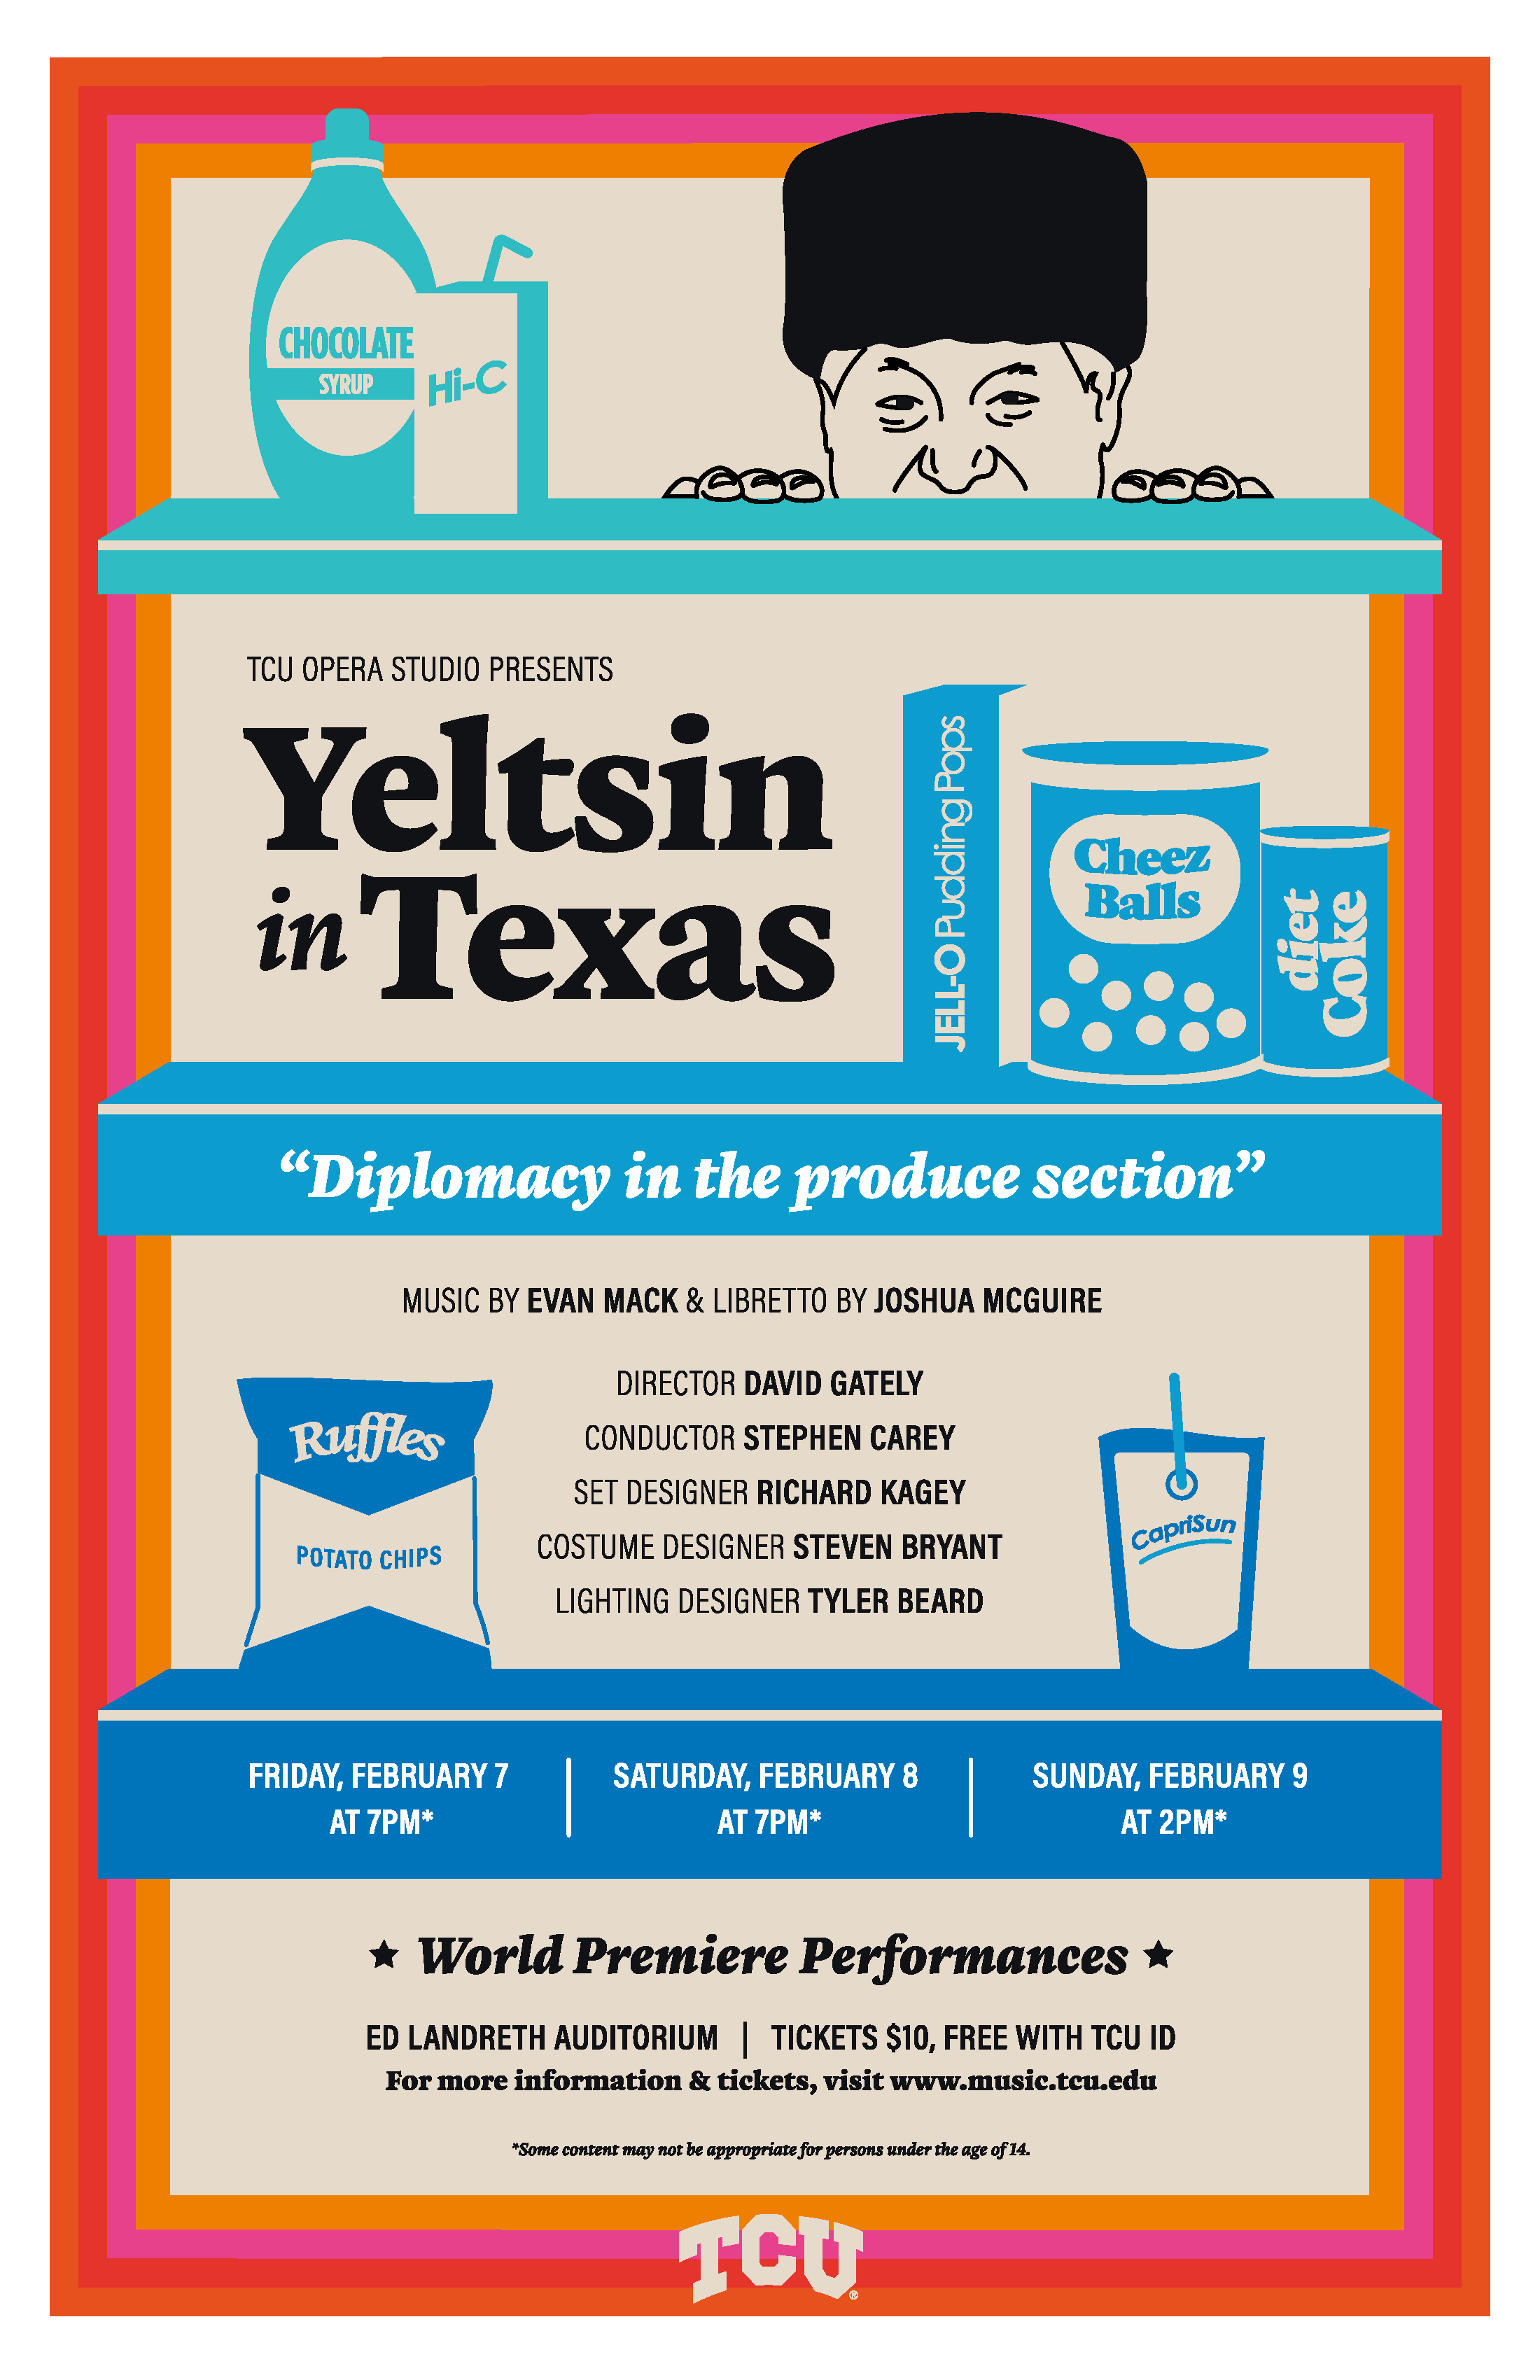 20211_TCU Yeltsin in Texas Opera_Poster_v2